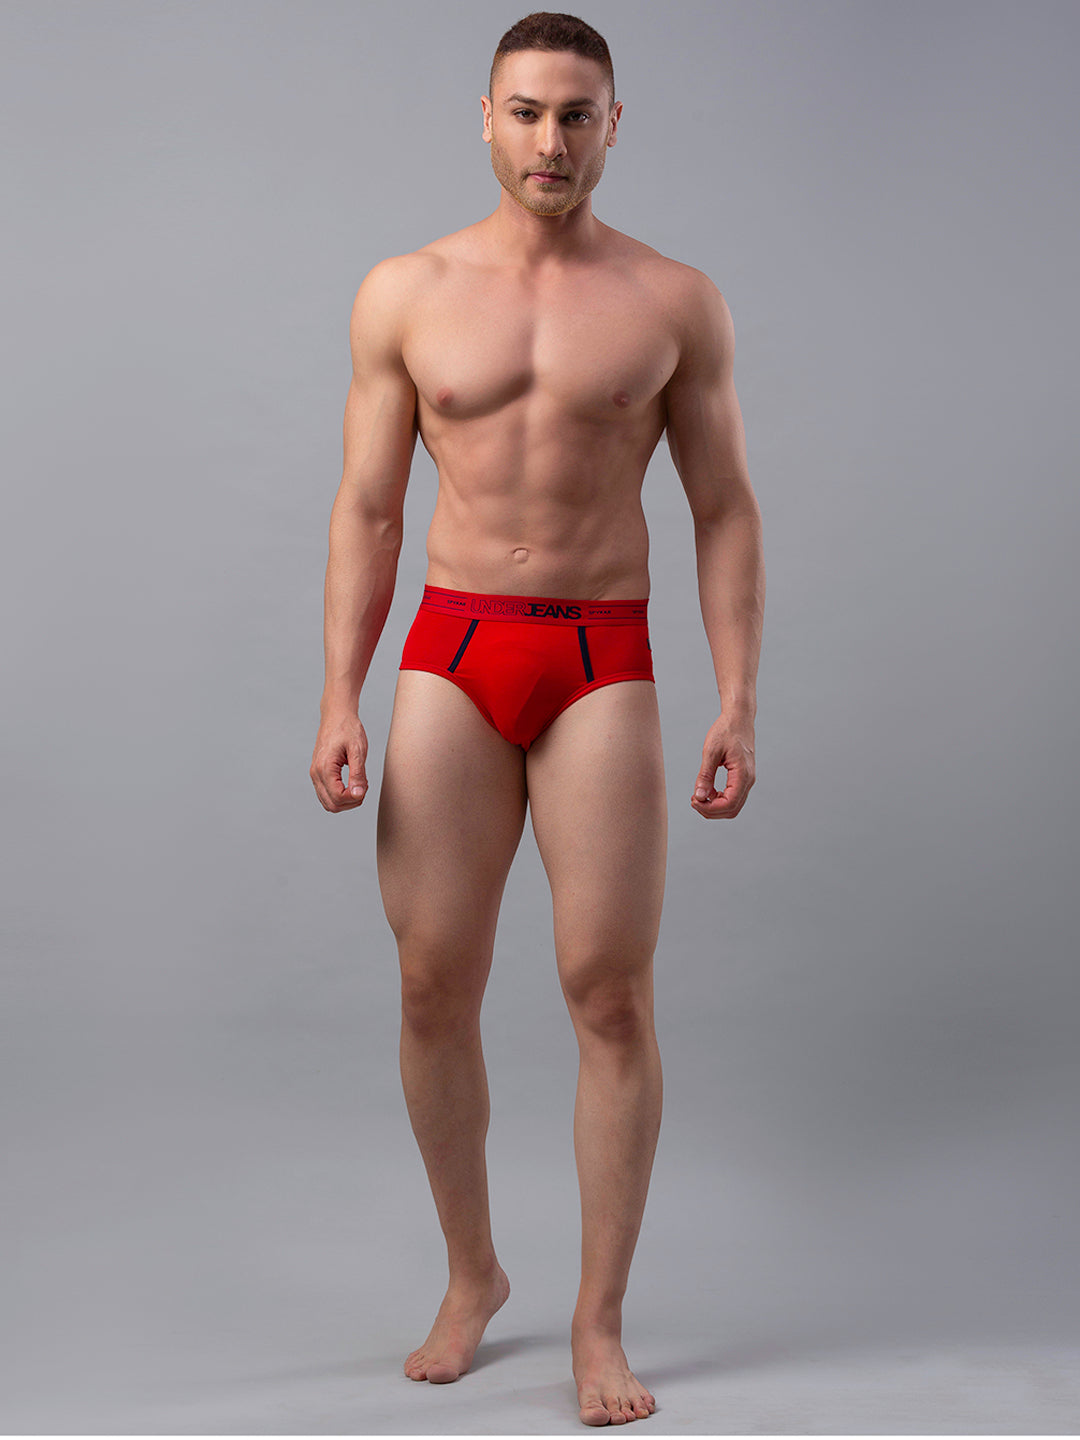 Men Premium Cotton Blend Red Brief - (Pack of 2)- UnderJeans by Spykar